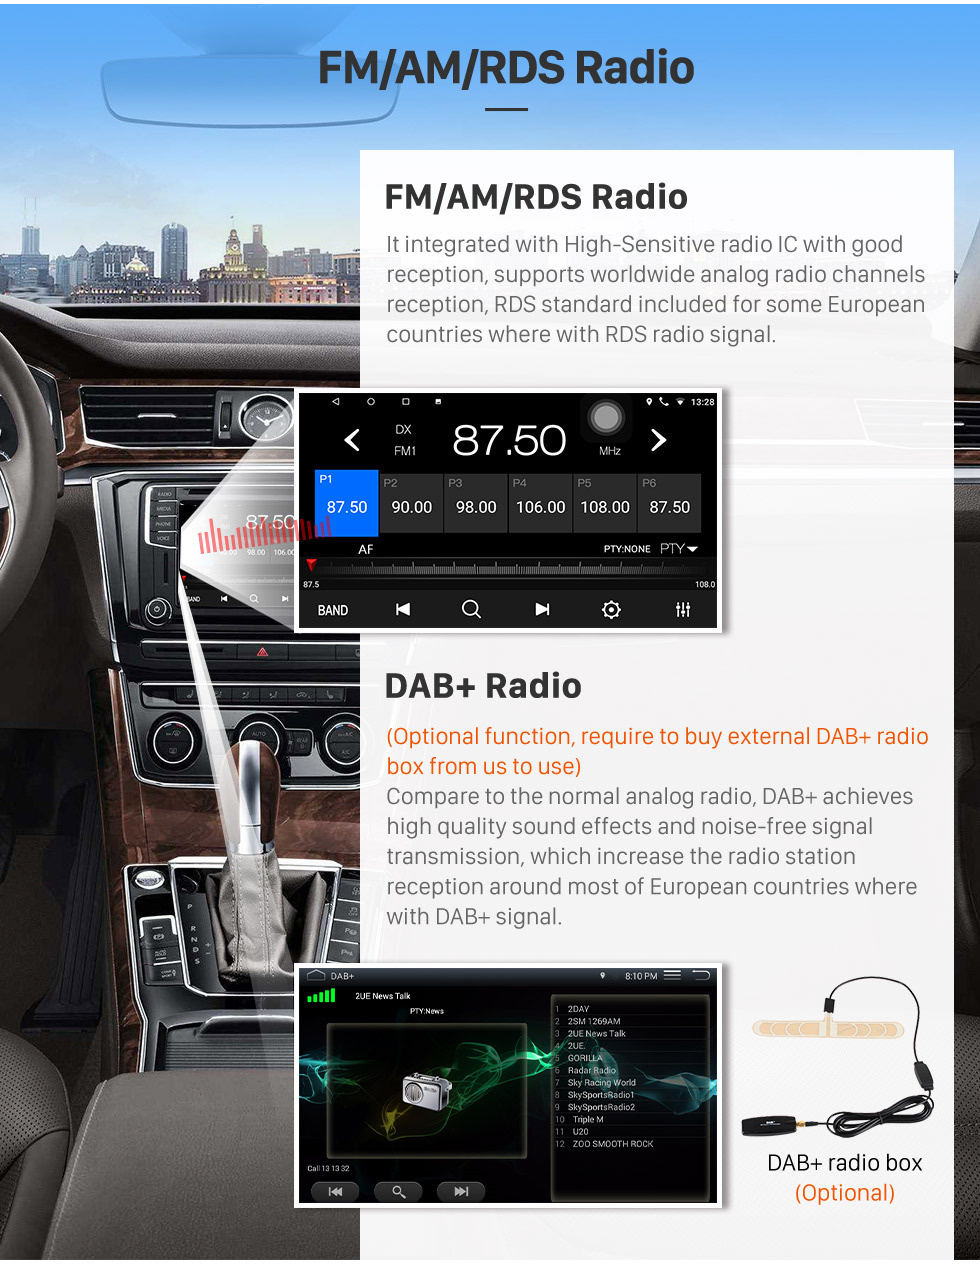 Seicane HD Pantalla táctil 9 pulgadas Android 10.0 Radio de navegación GPS para 2016-2018 Peugeot 308 con Bluetooth AUX soporte Carplay Control del volante